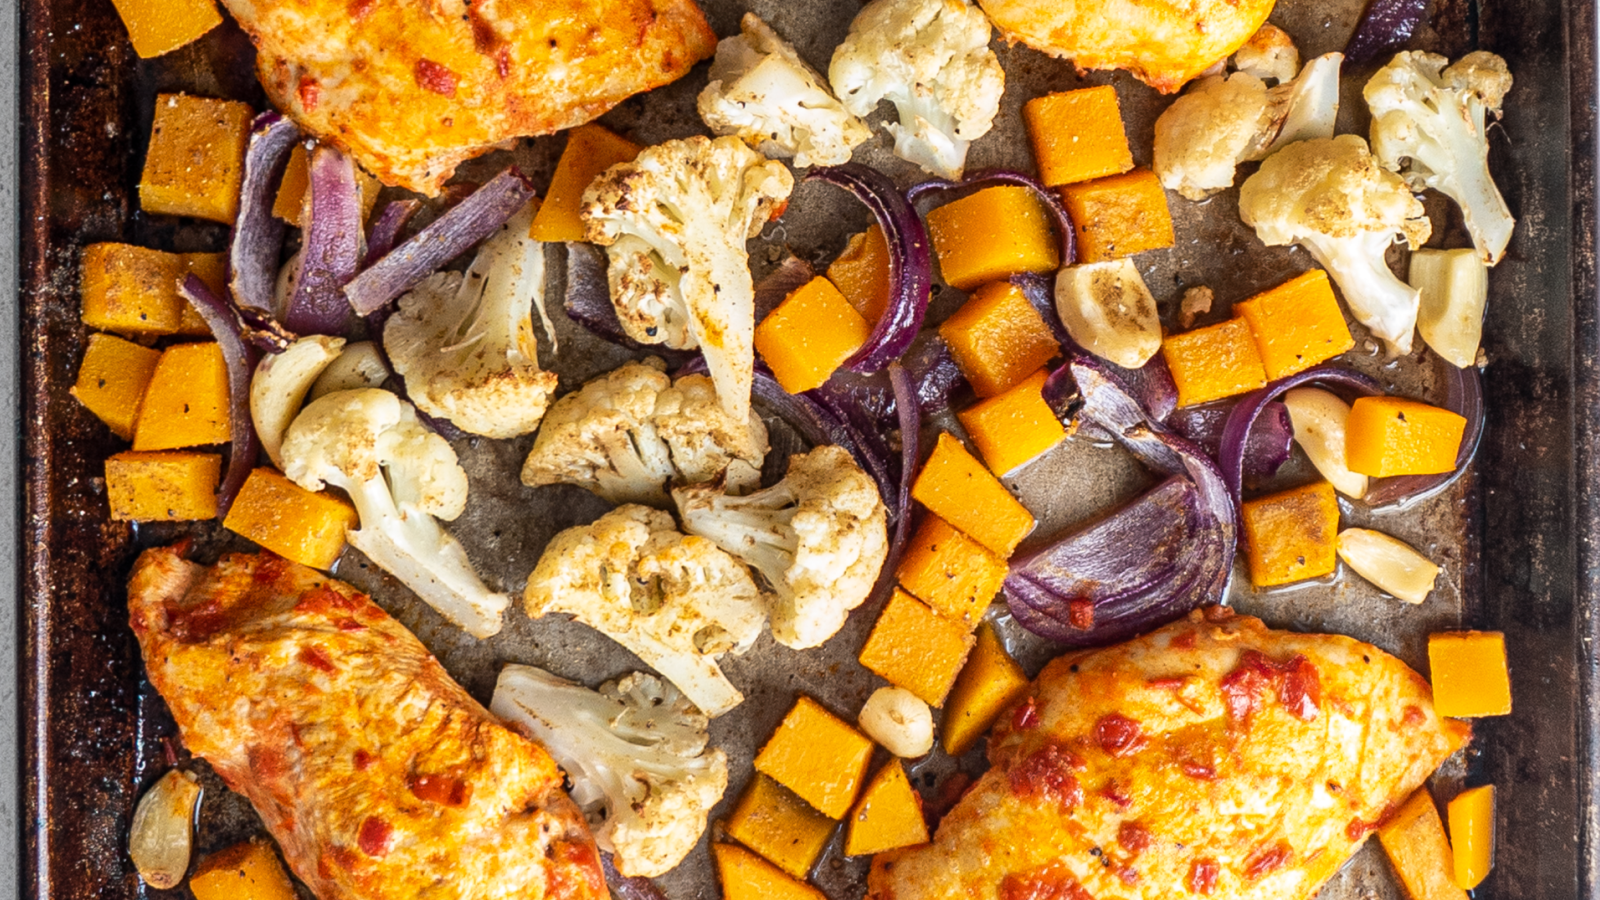 Passover Meal Idea: Harissa chicken and veggie sheet-pan dinner